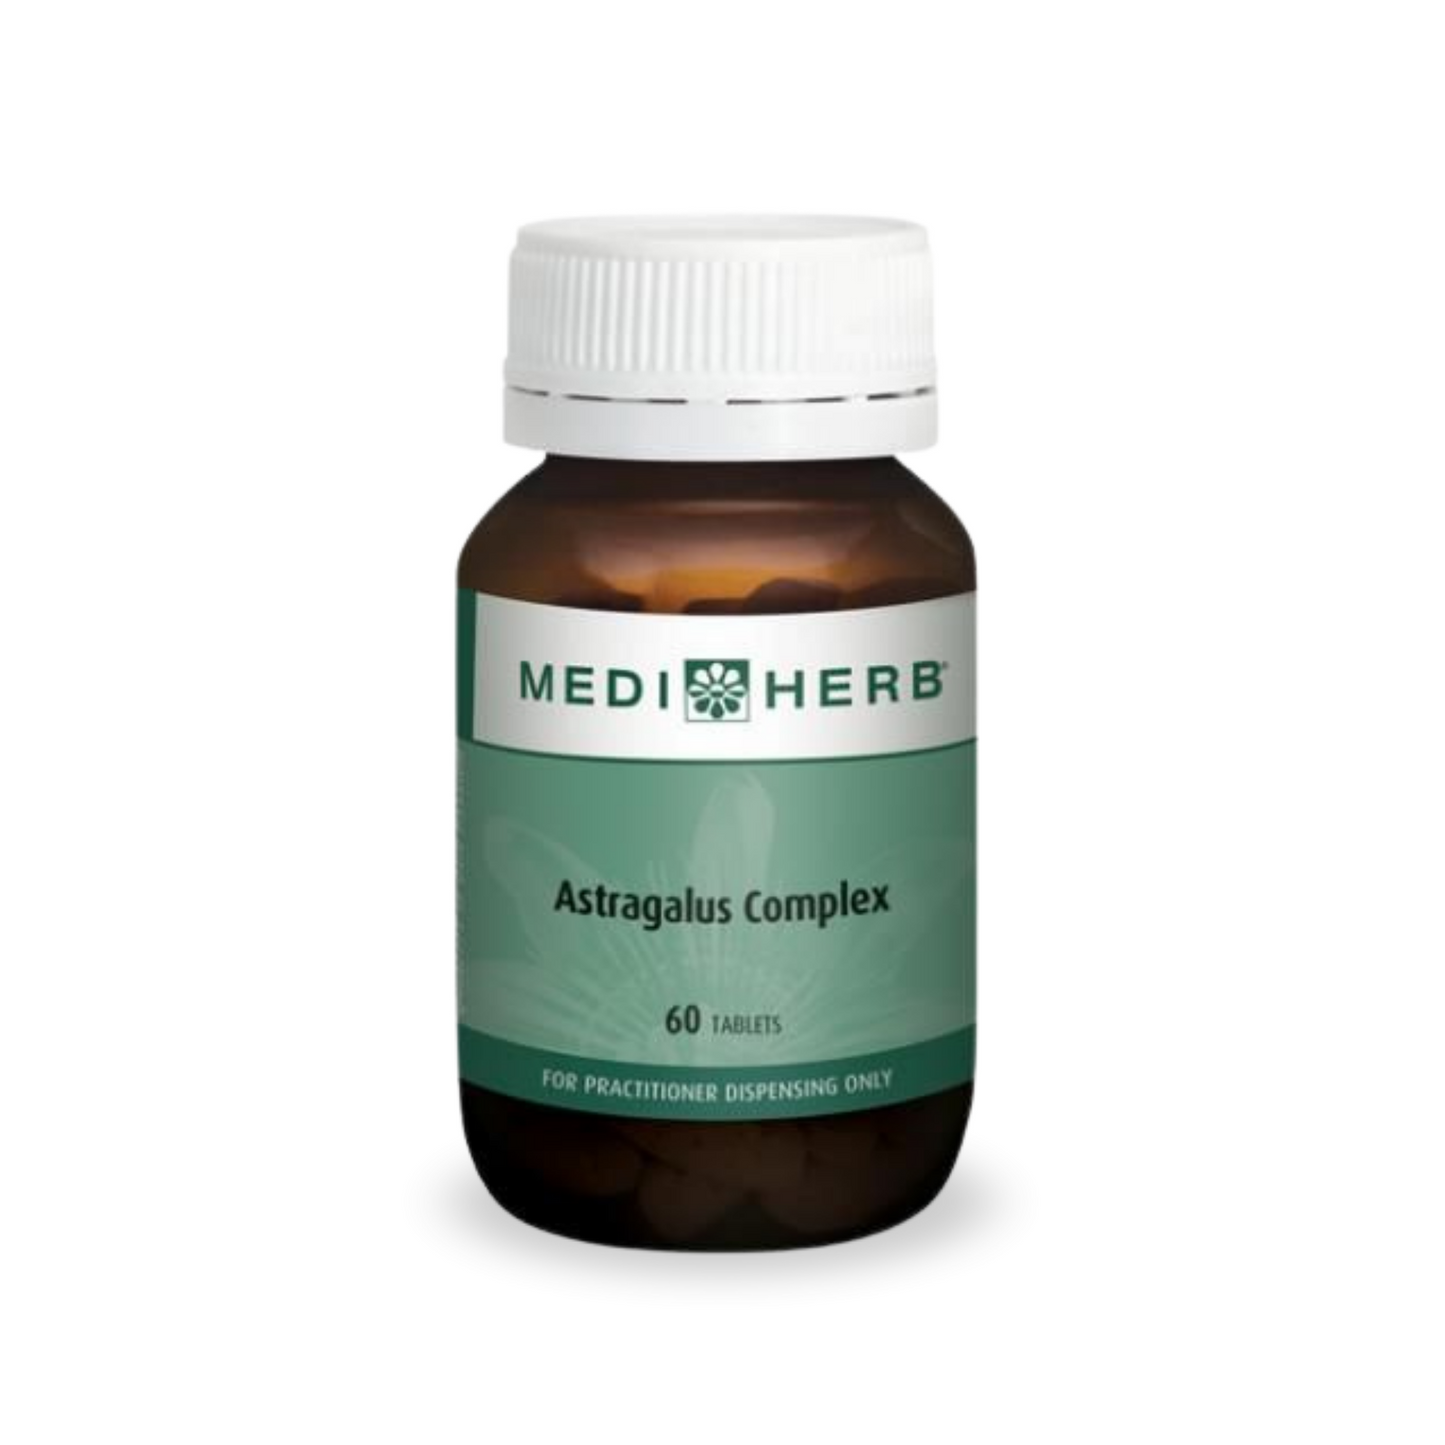 MediHerb Astragalus Complex 60 Tablets